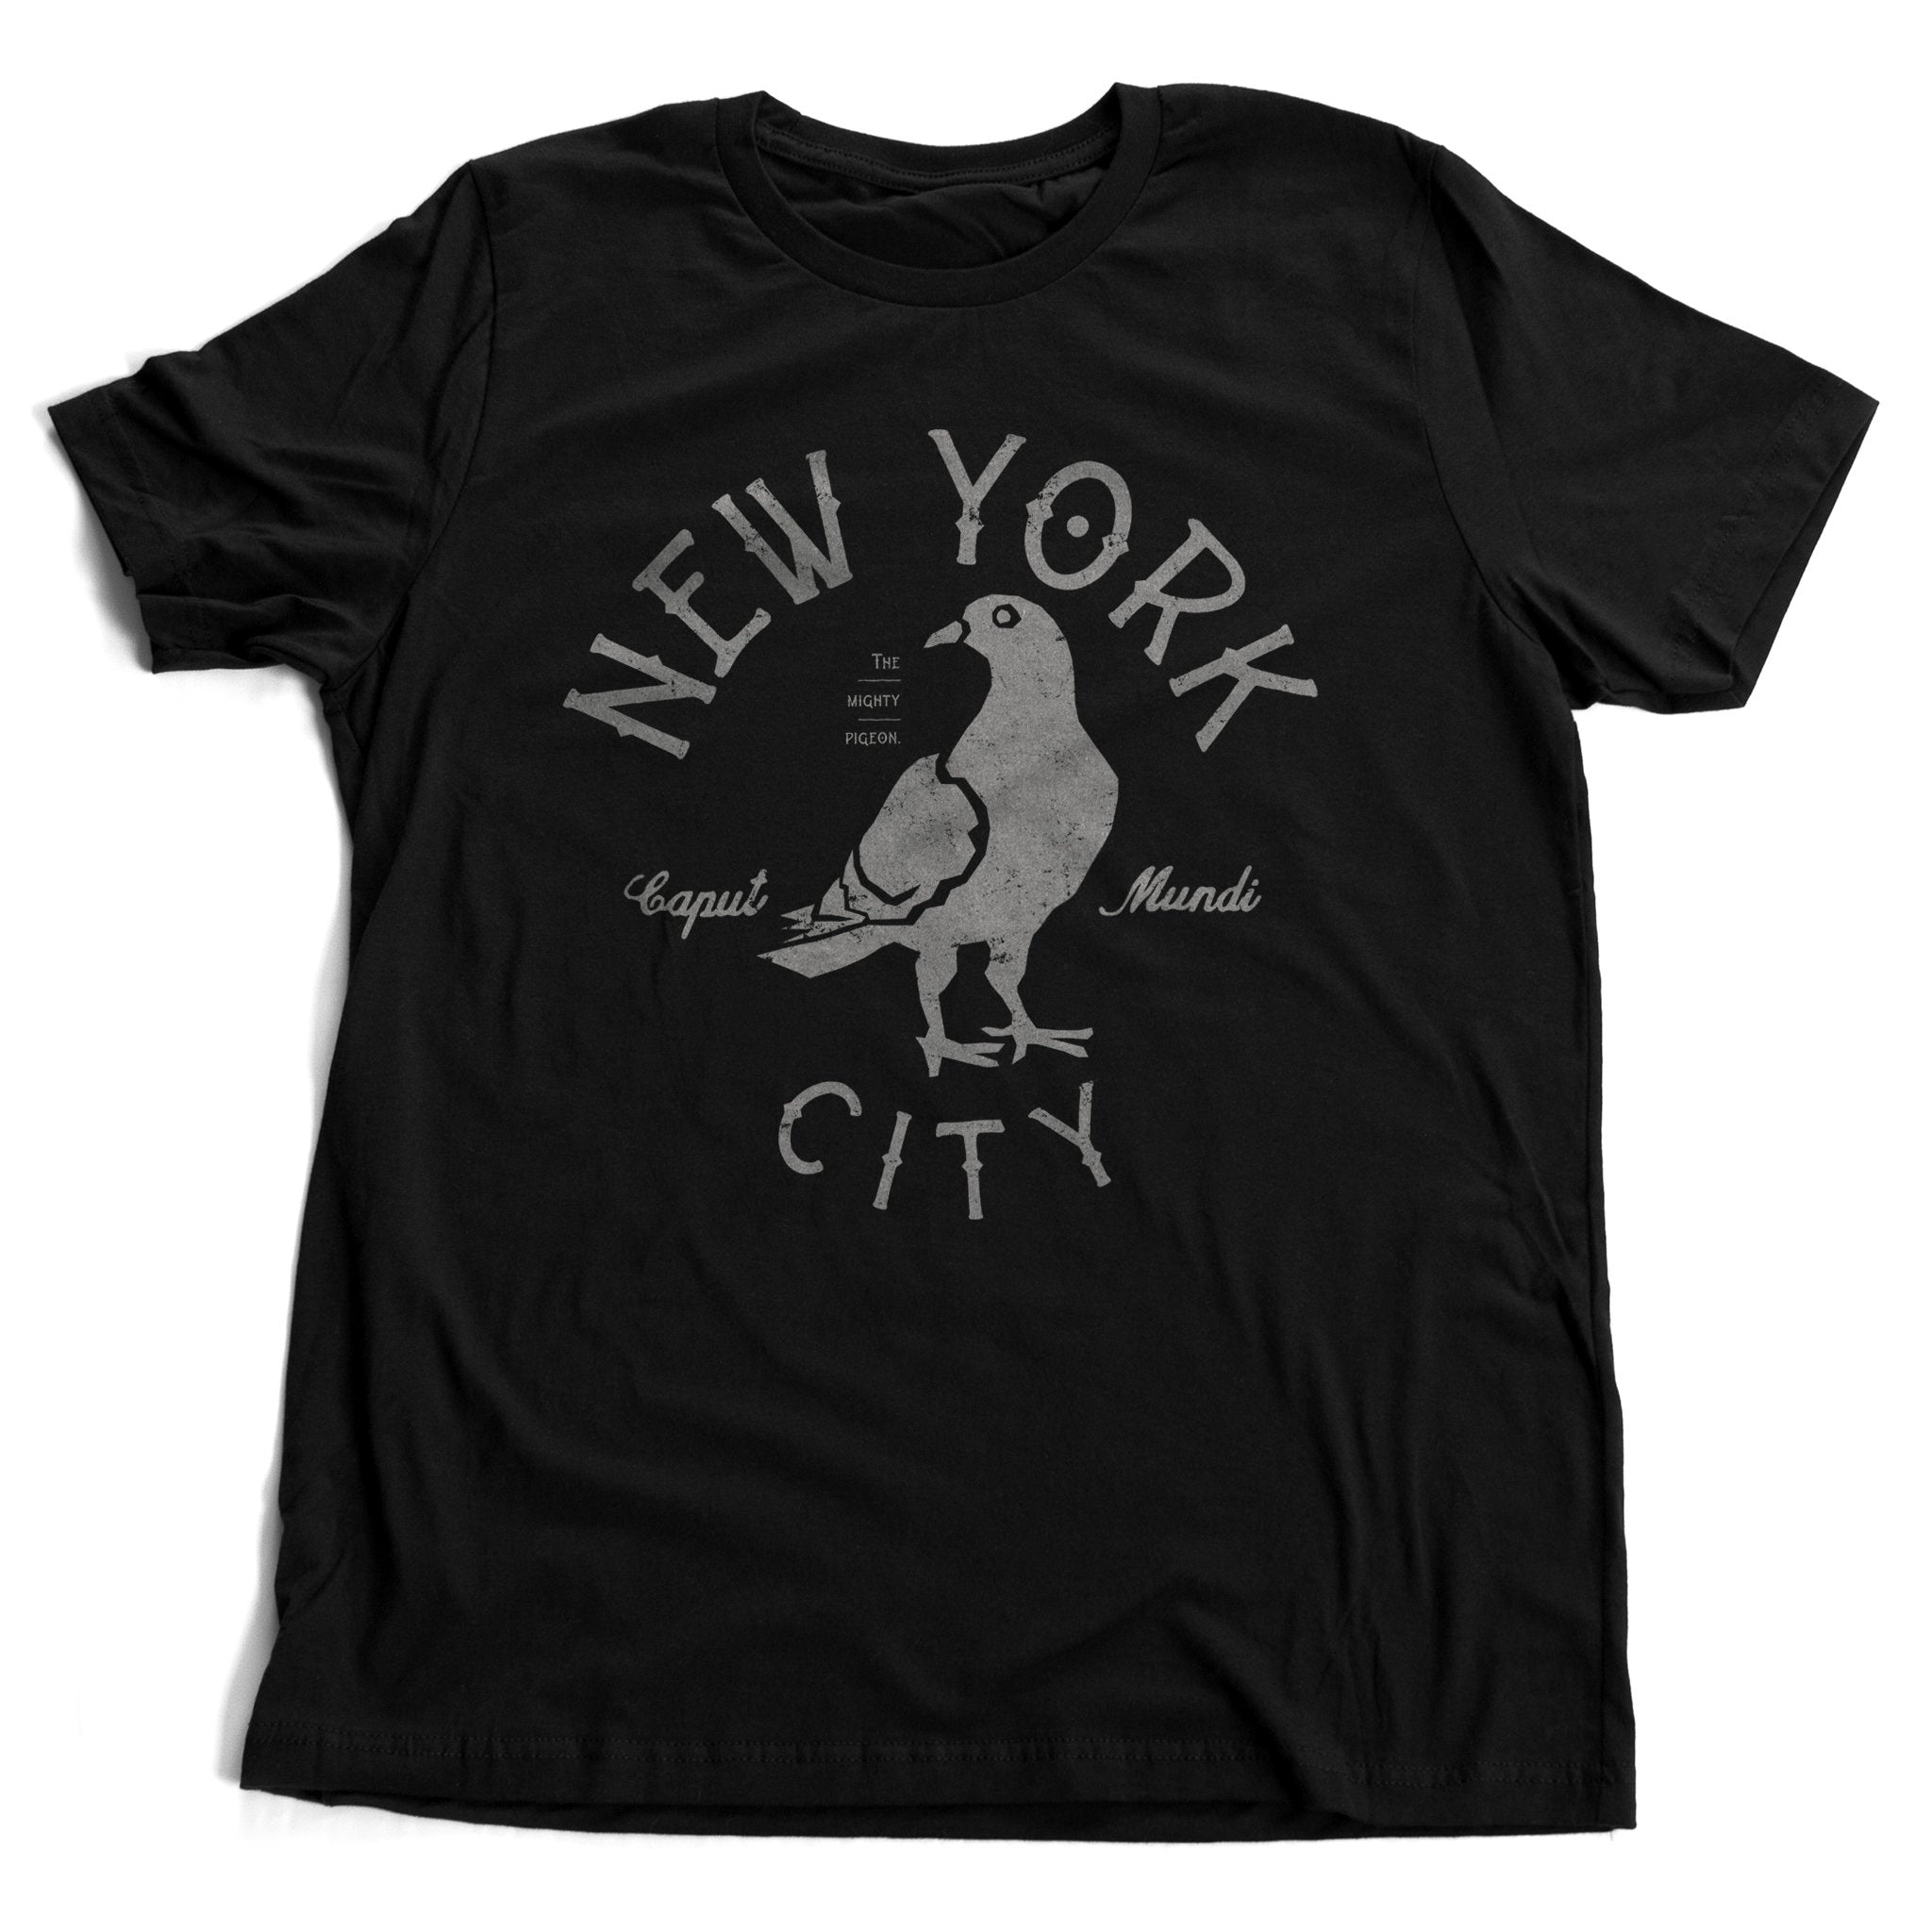 New York City (pigeon) — Retro Premium Unisex T-Shirt